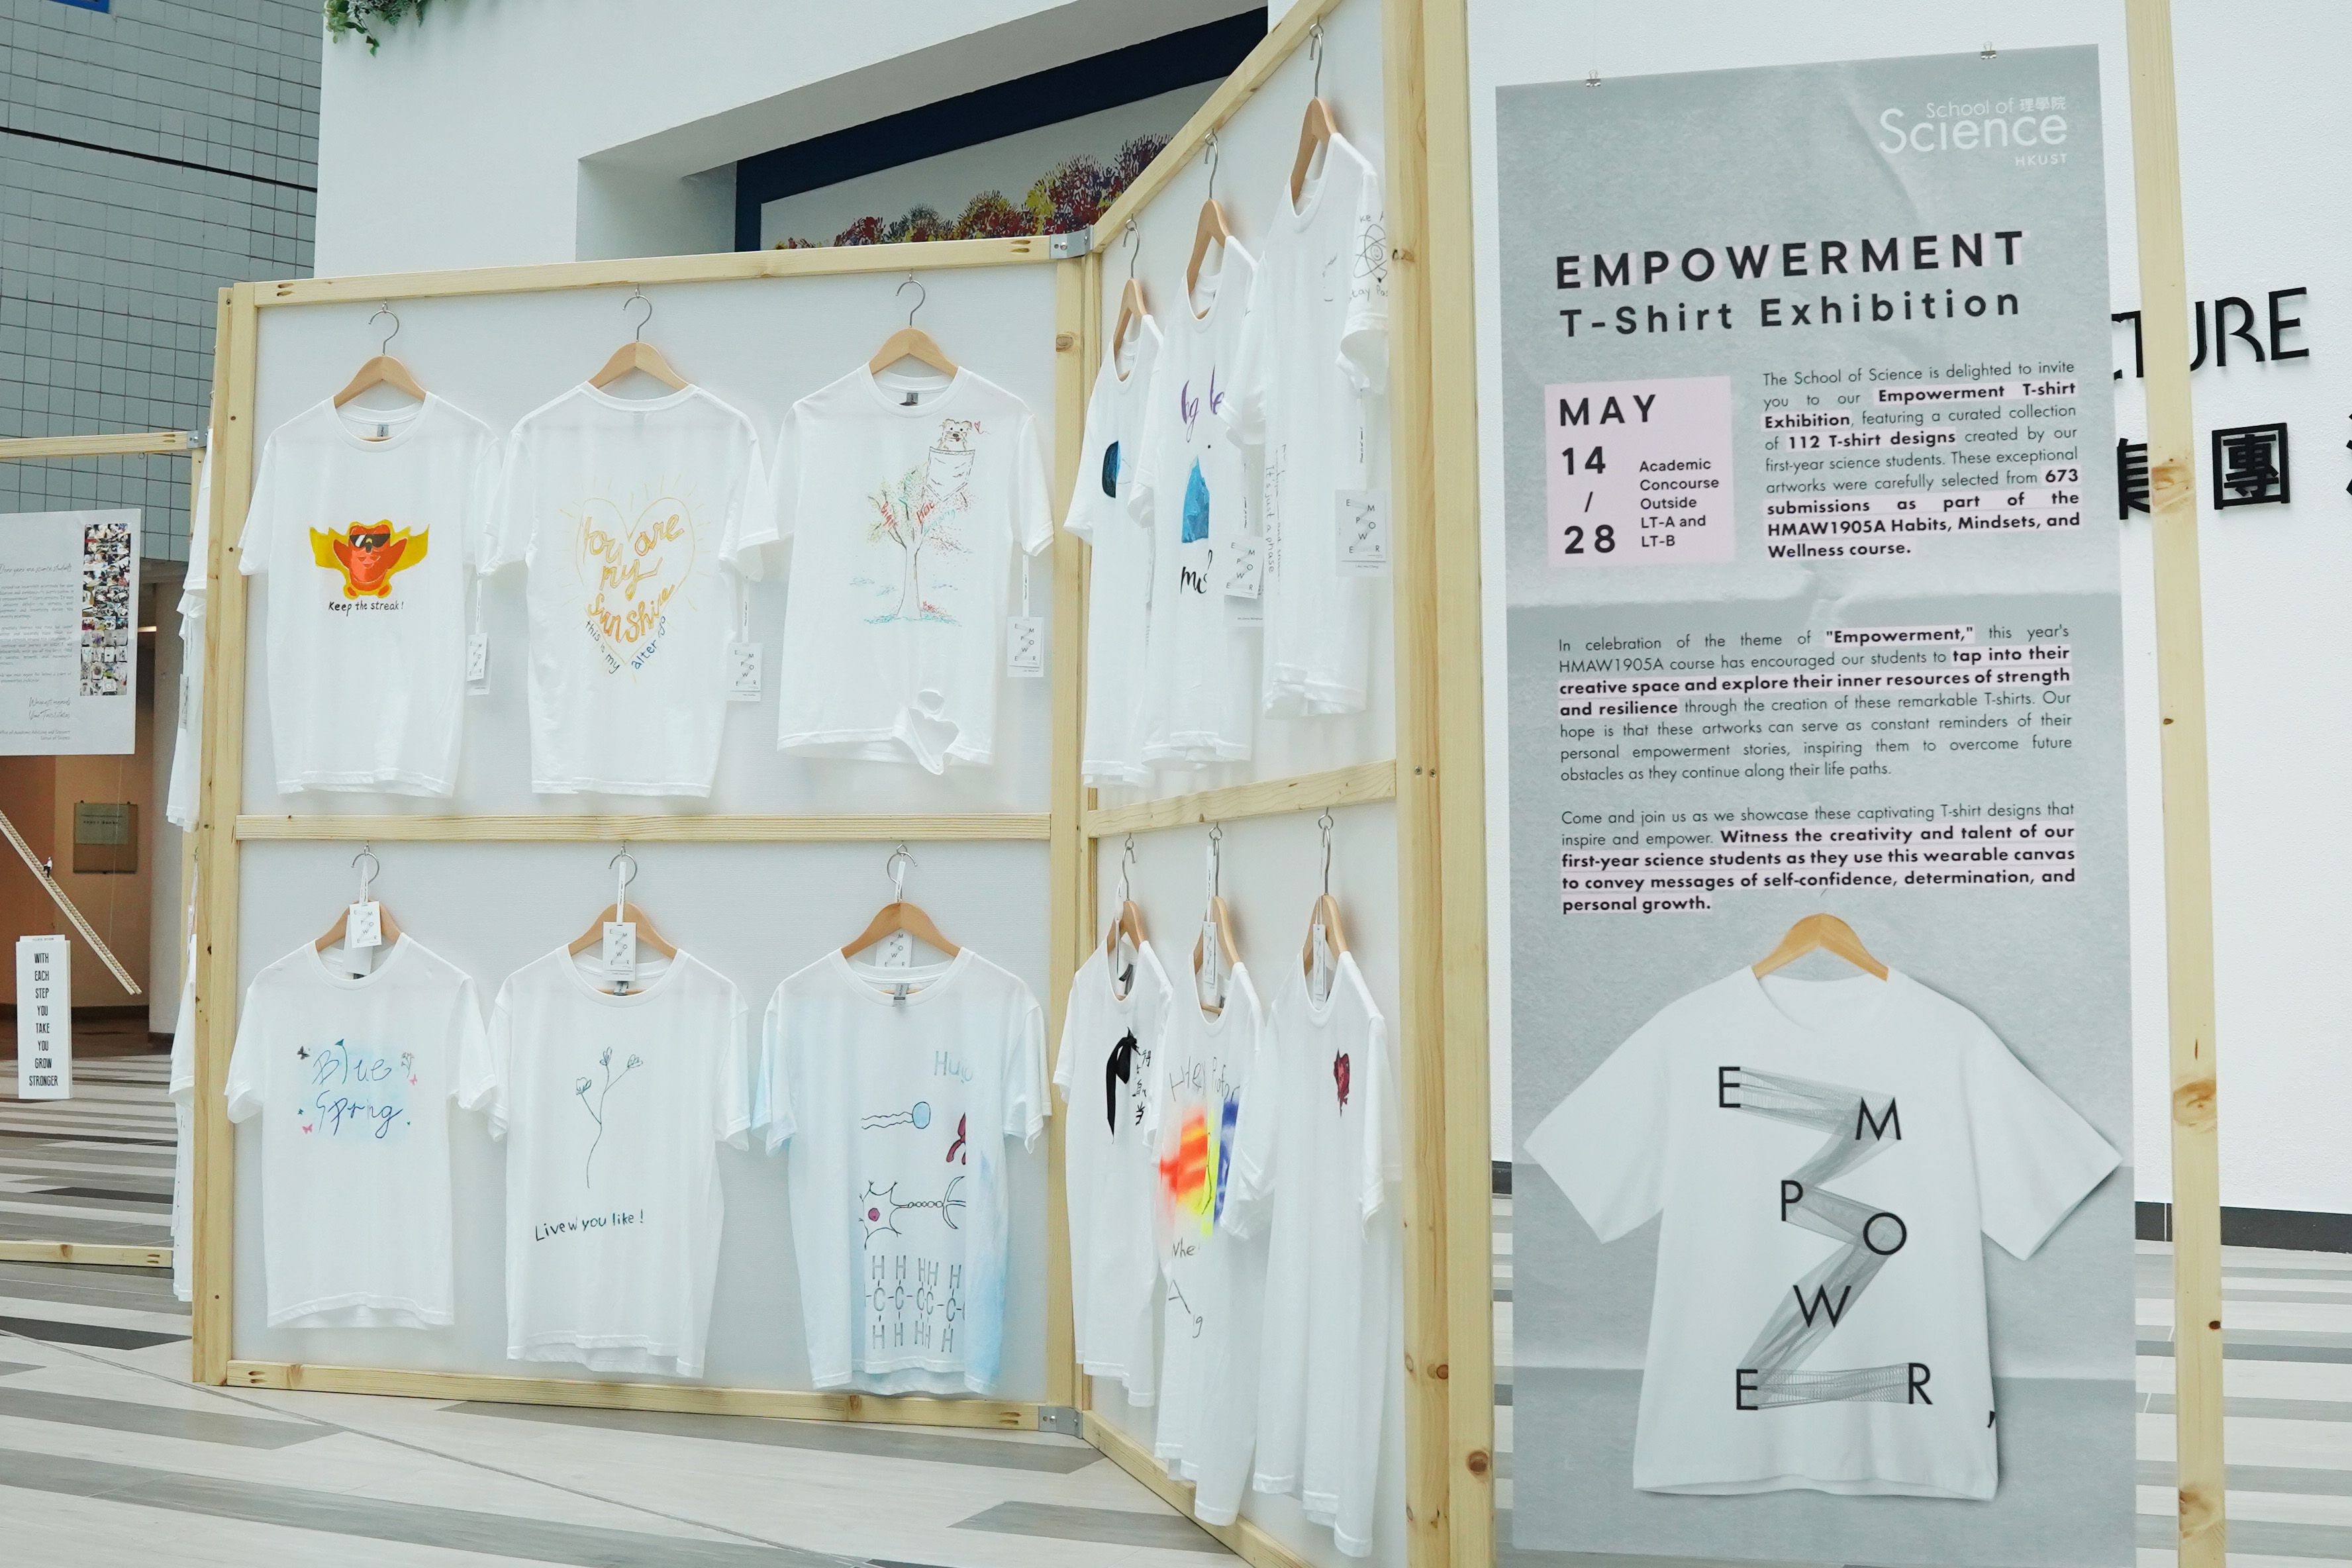 EMPOWERMENT T-shirt Exhibition